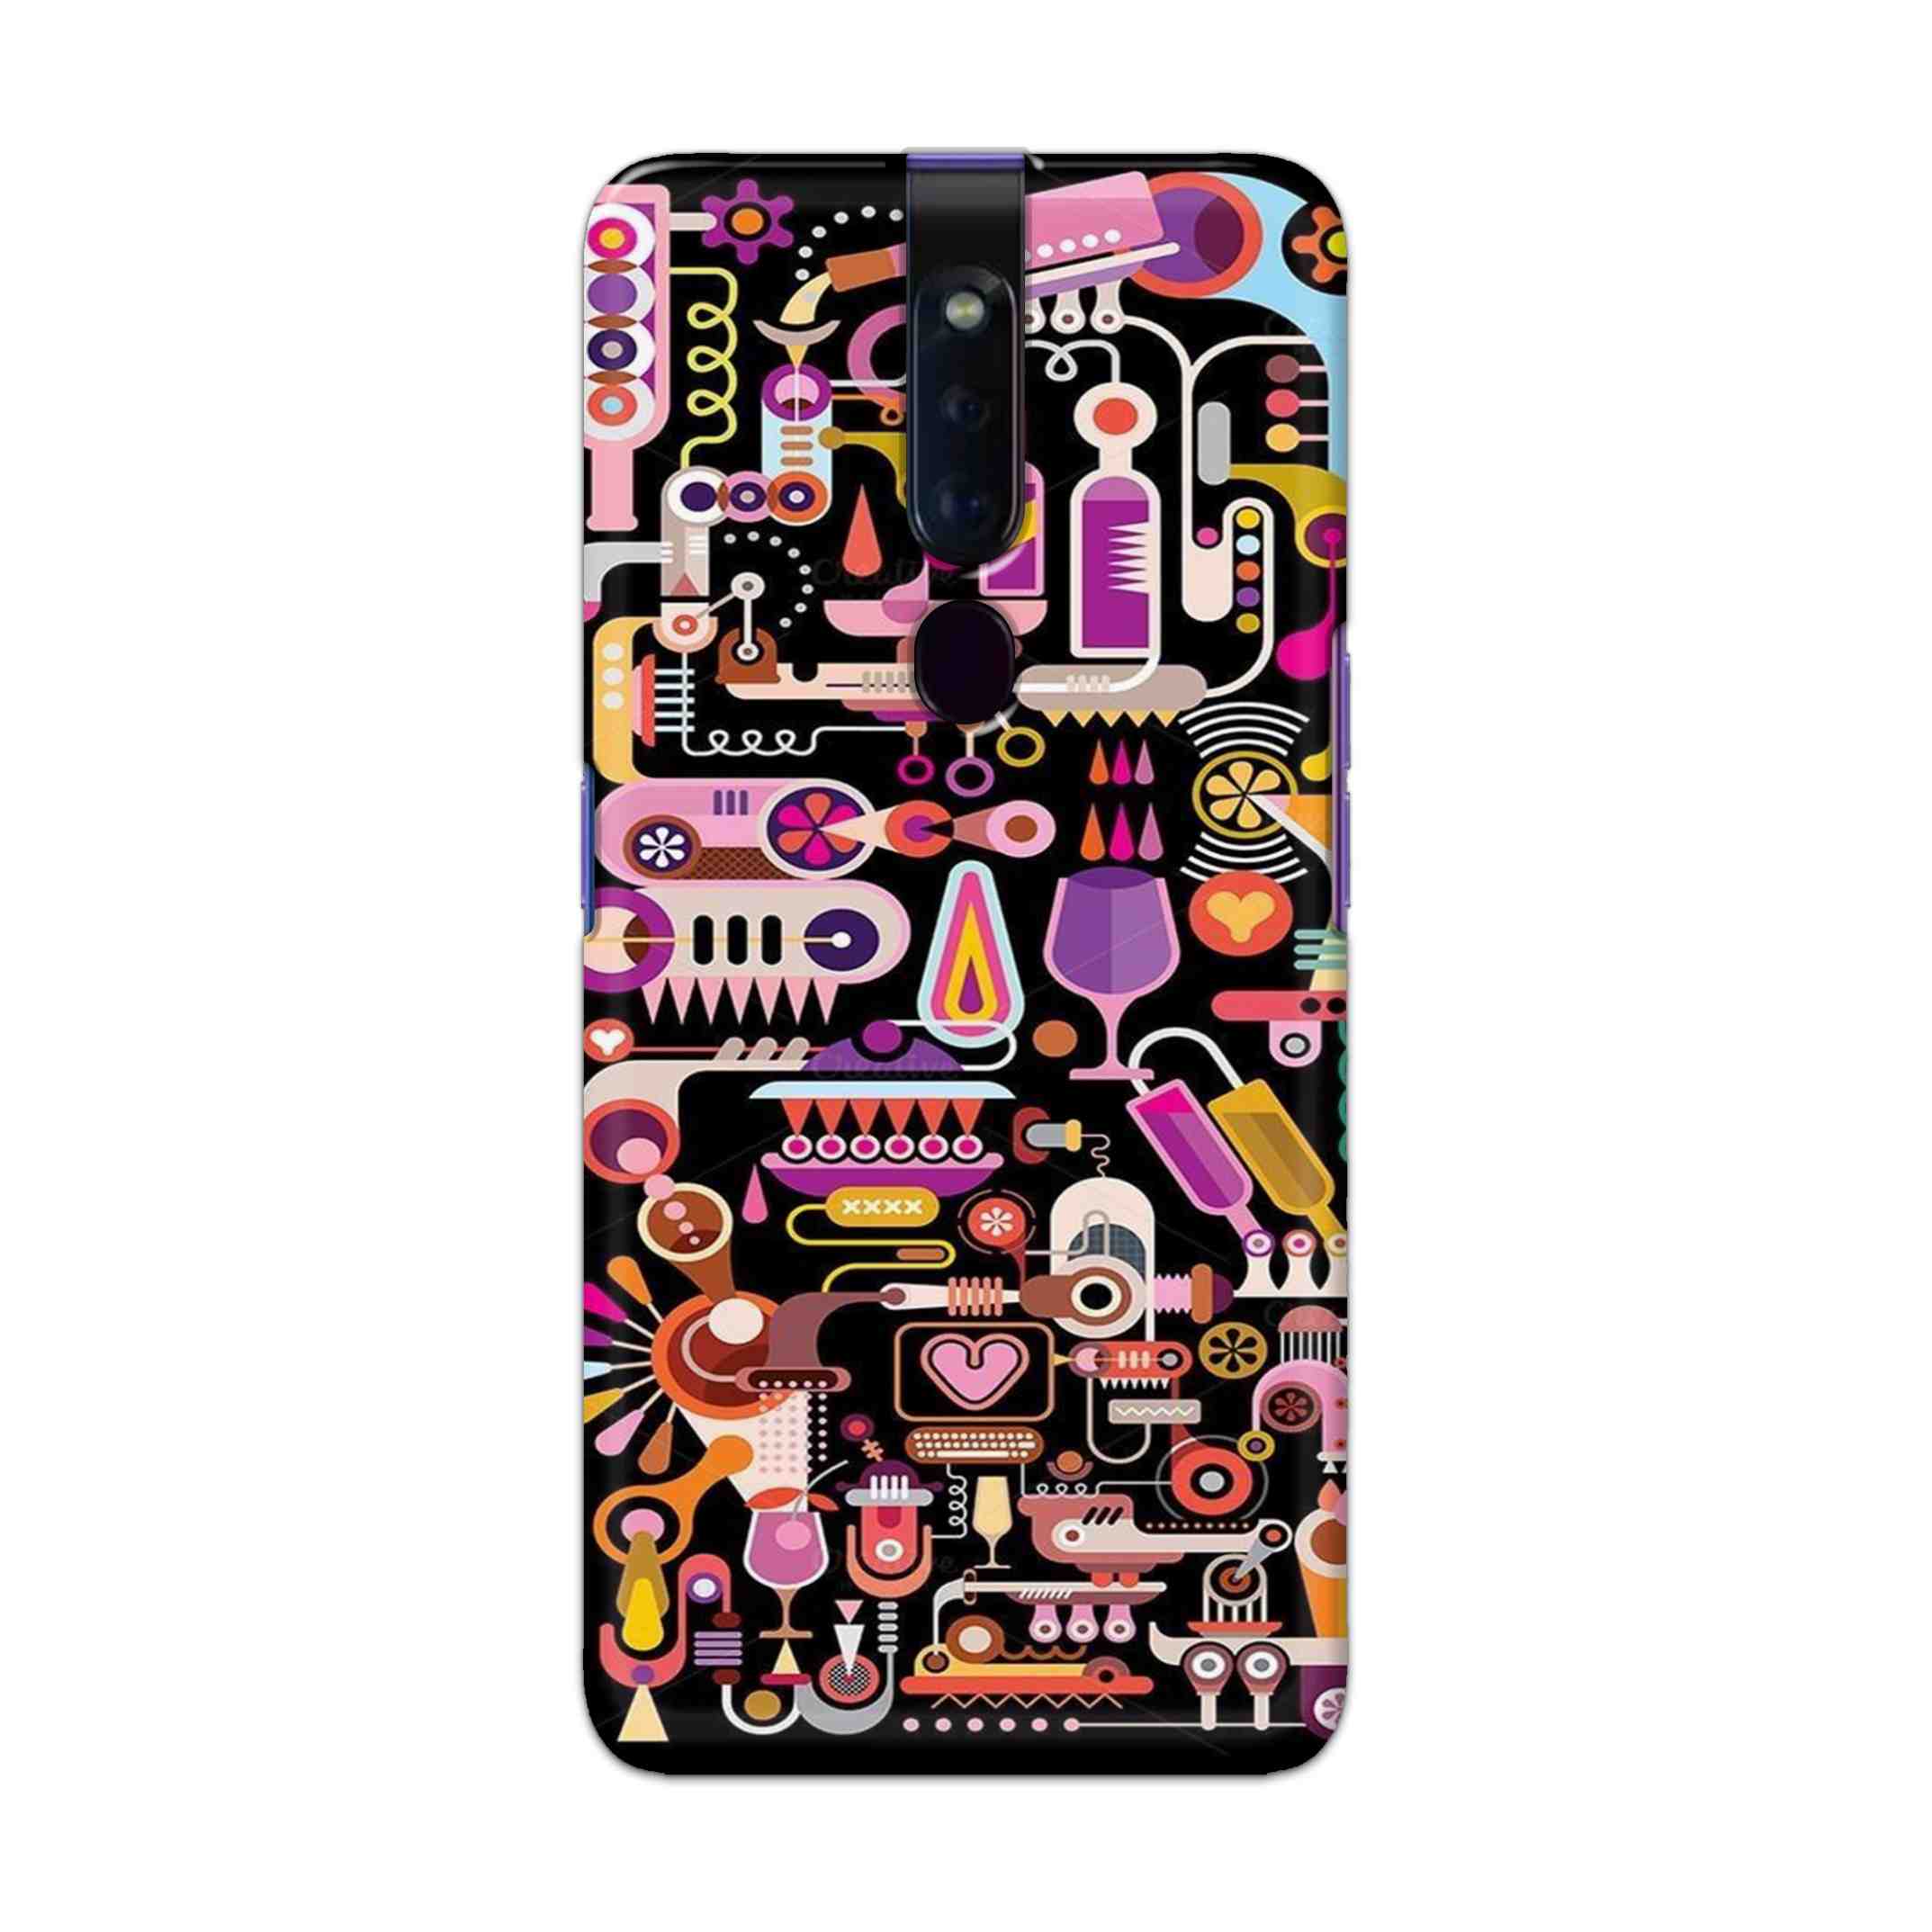 Buy Lab Art Hard Back Mobile Phone Case Cover For Oppo F11 Pro Online